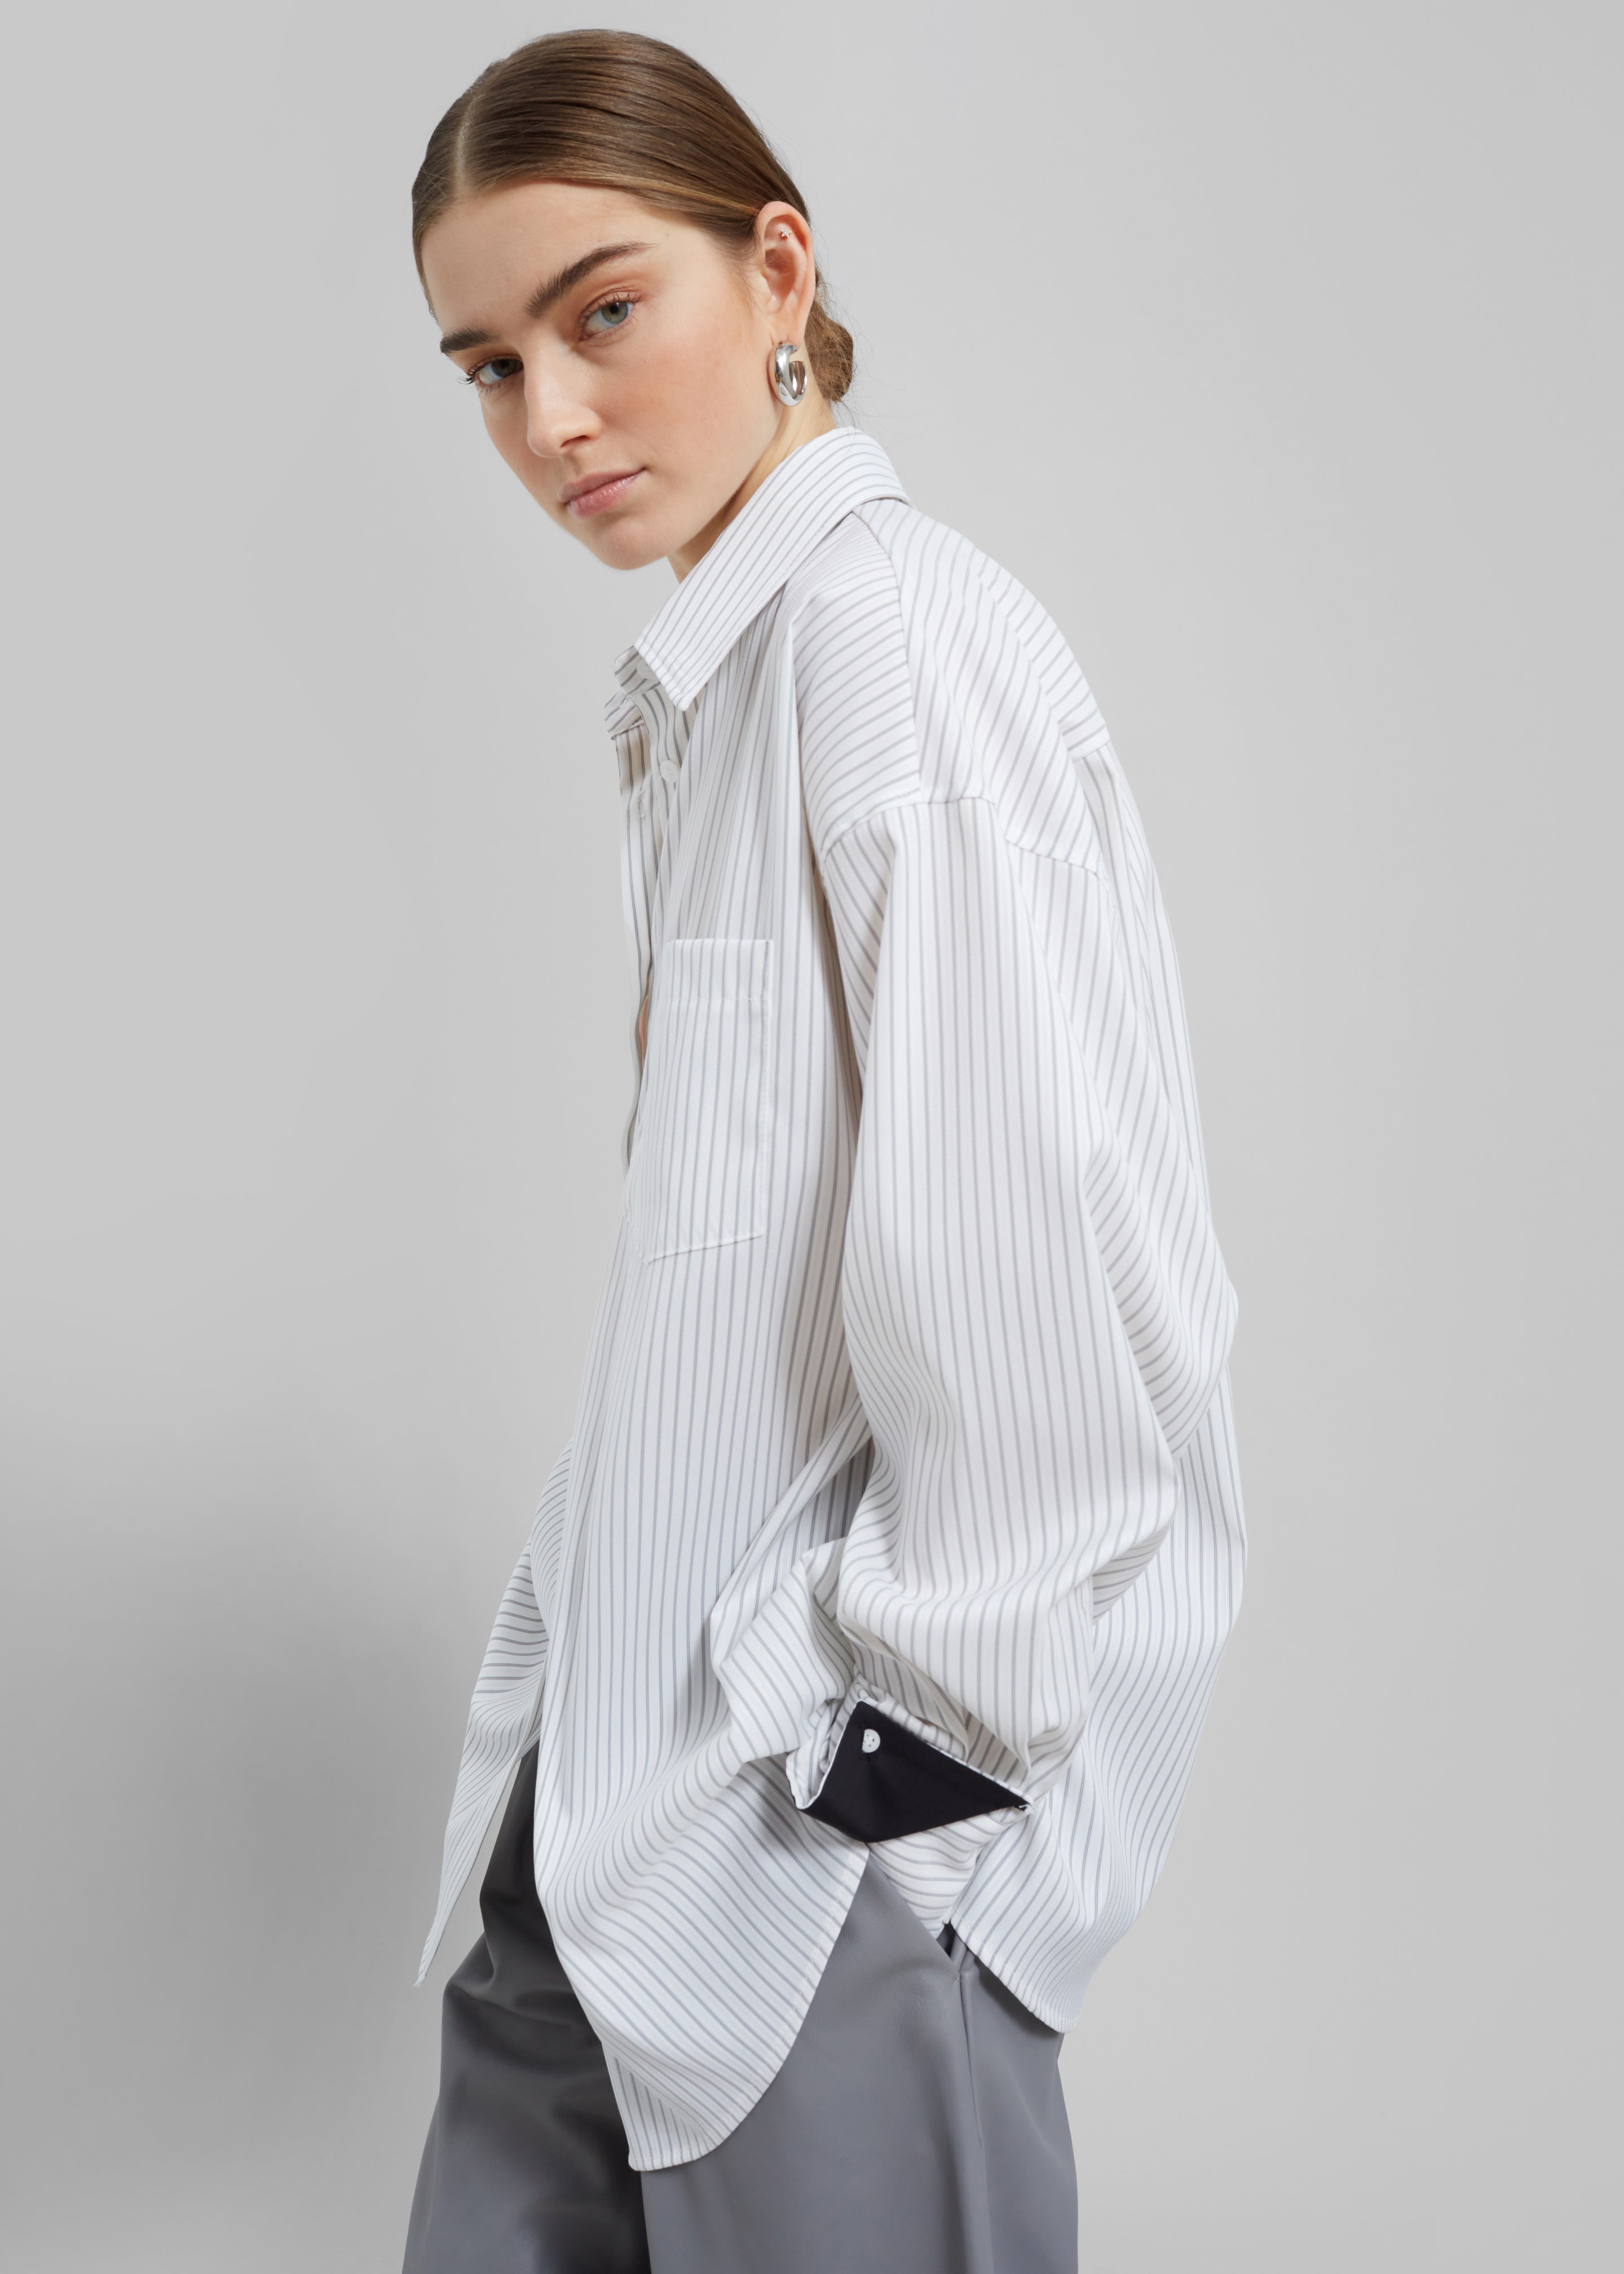 Leona Button Up Shirt - White/Grey Stripe - 6